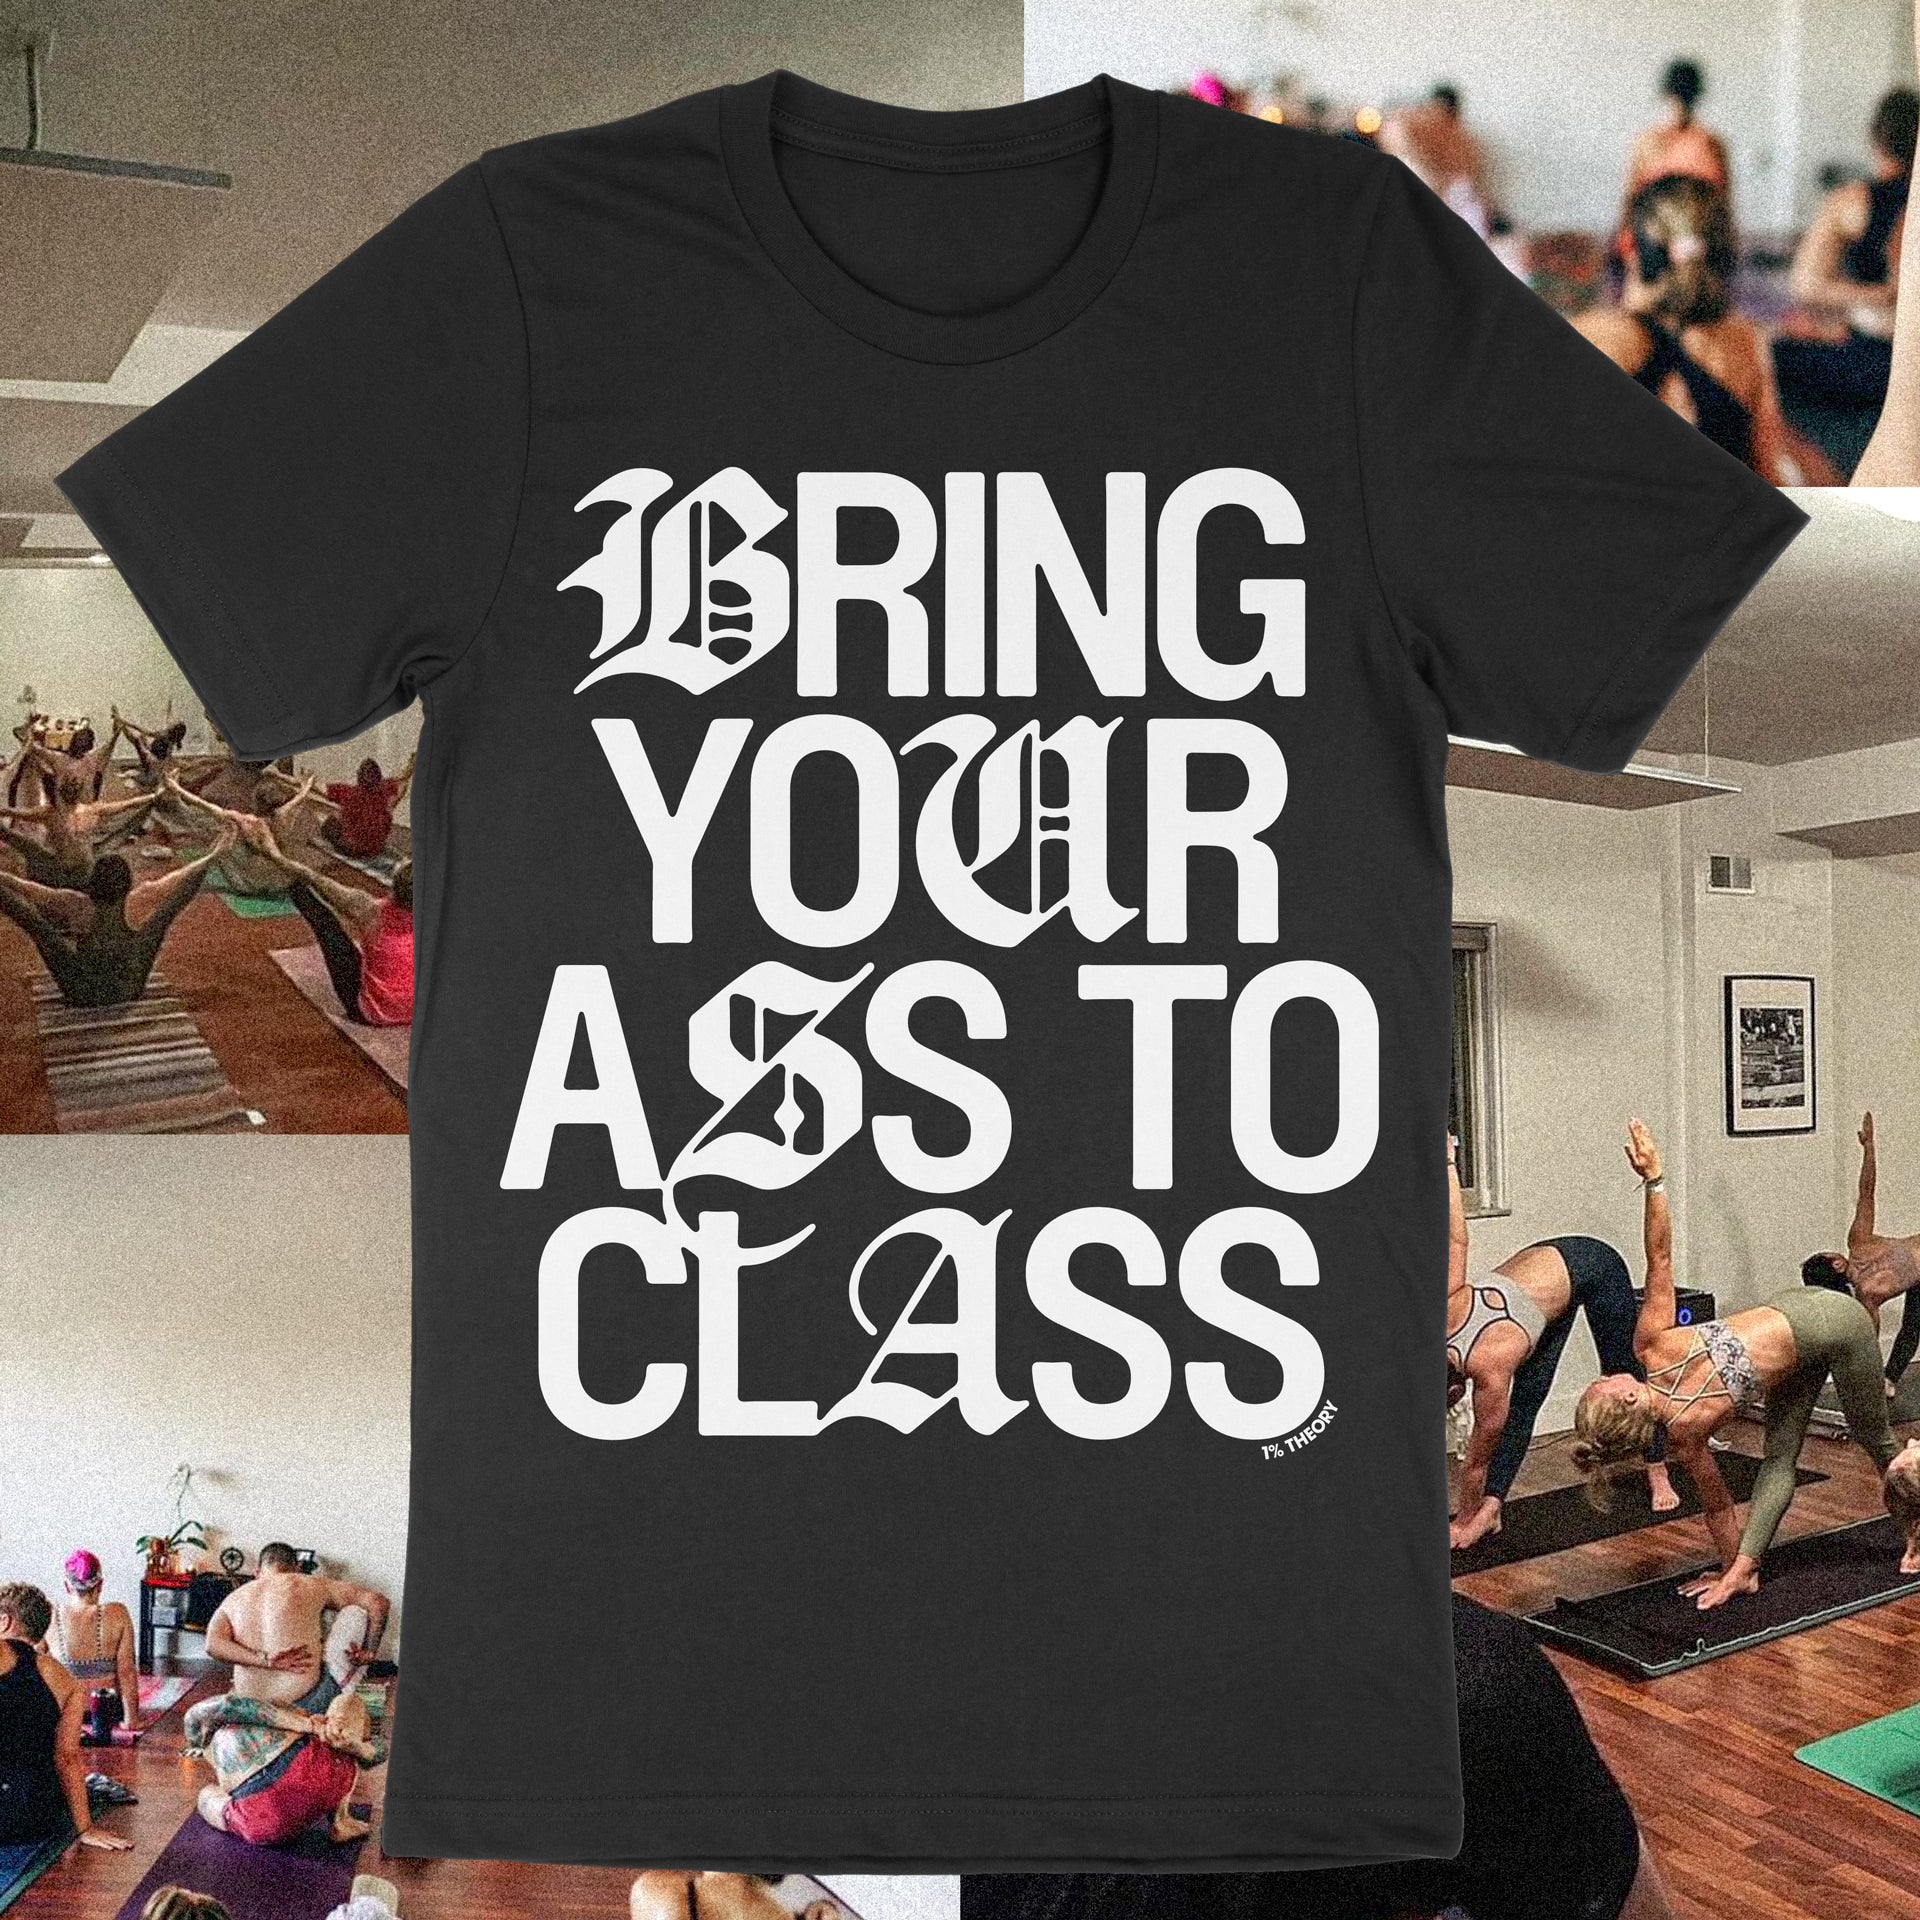 Bring Your Ass to Class- shirt